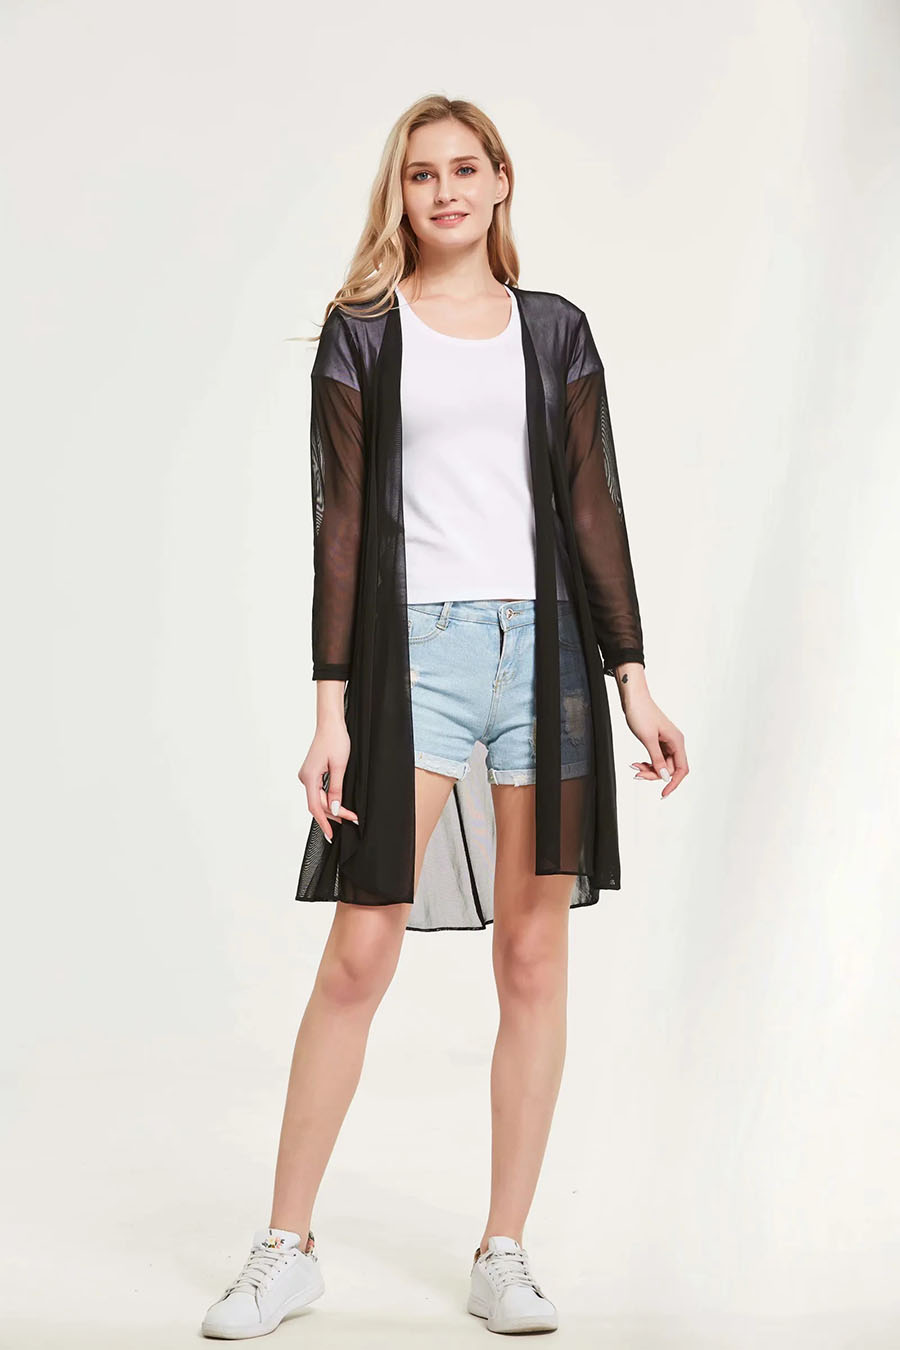 Fashion Black Mesh Cardigan Mid-length Coat,Sunscreen Shirts